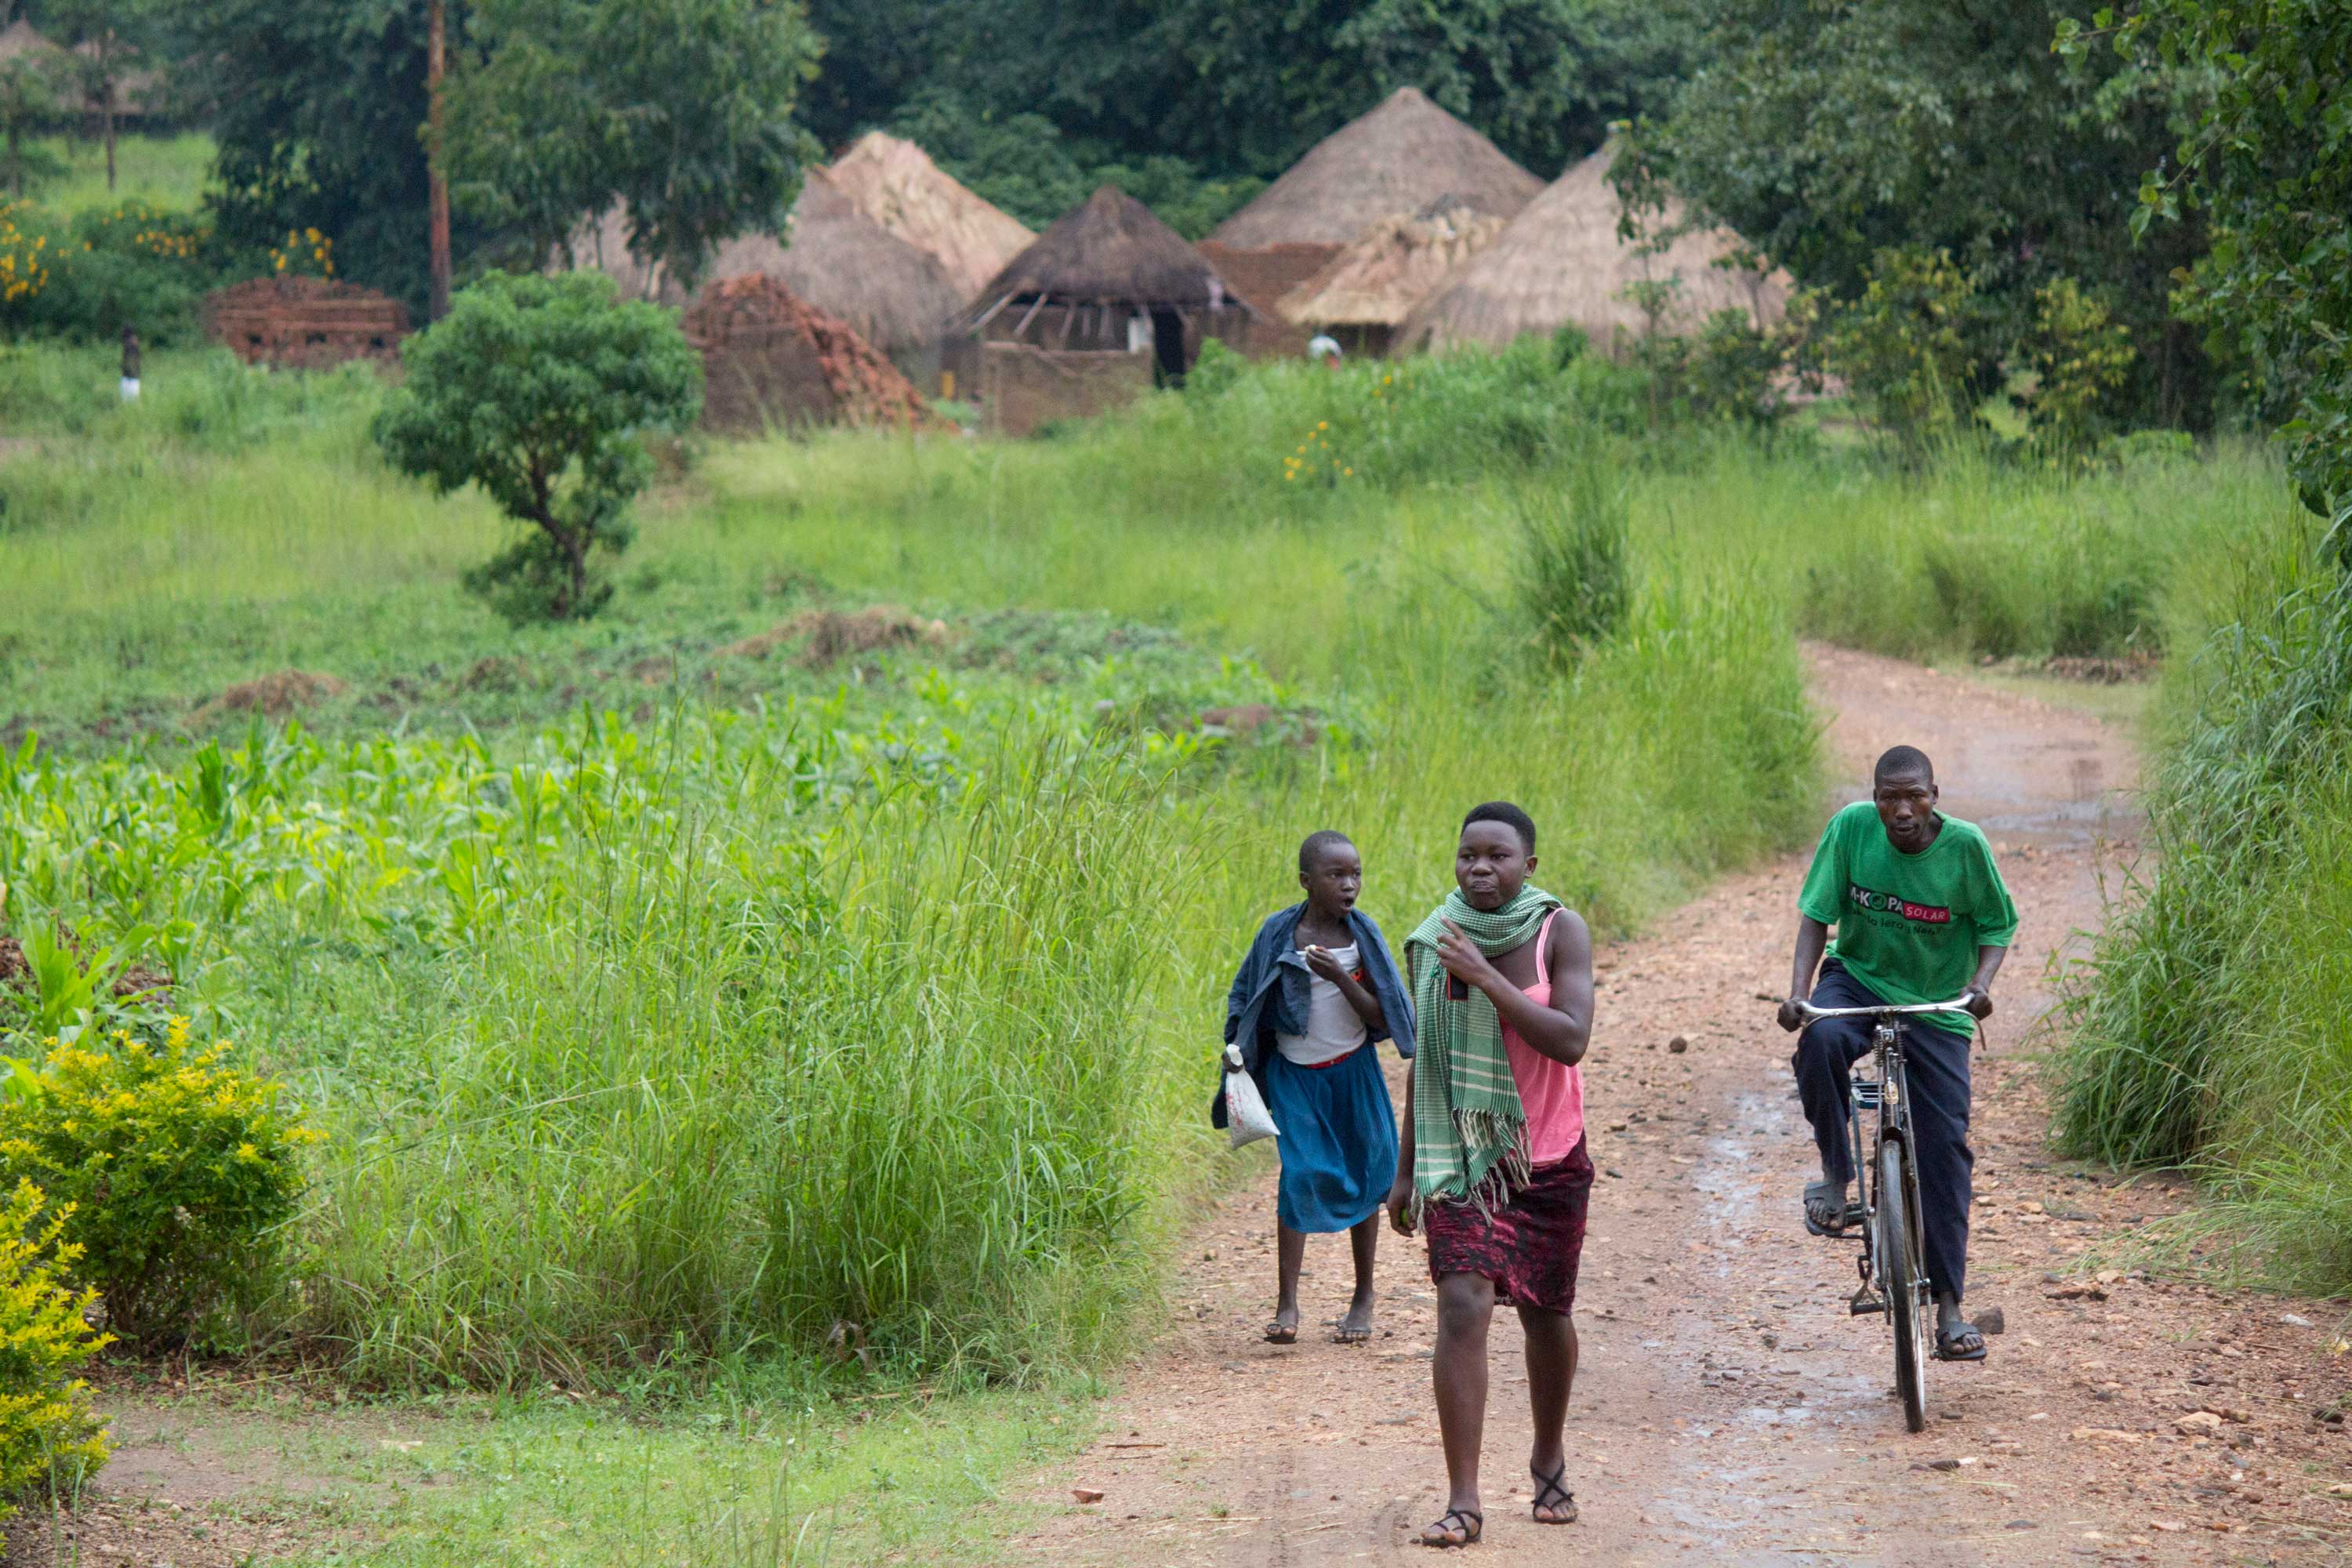 Pagisi, Uganda - You can help transform their community.